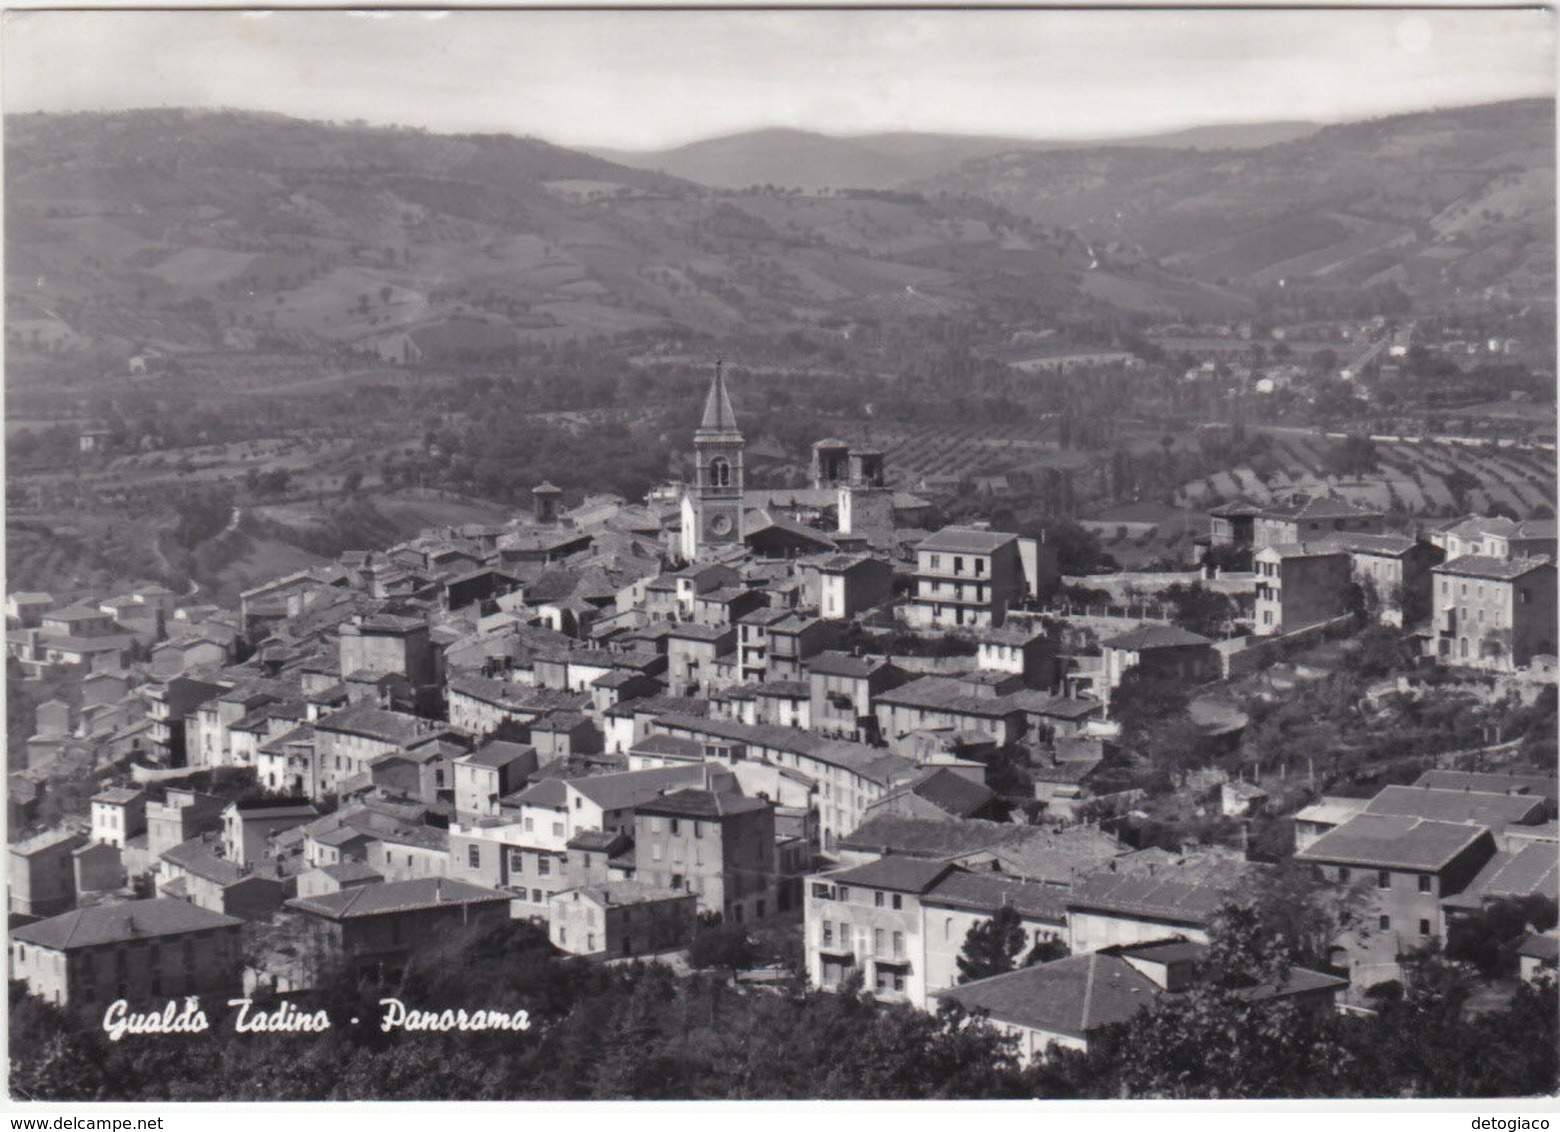 GUALDO TADINO - PERUGIA - PANORAMA - VIAGG. 1965 -24640- - Perugia